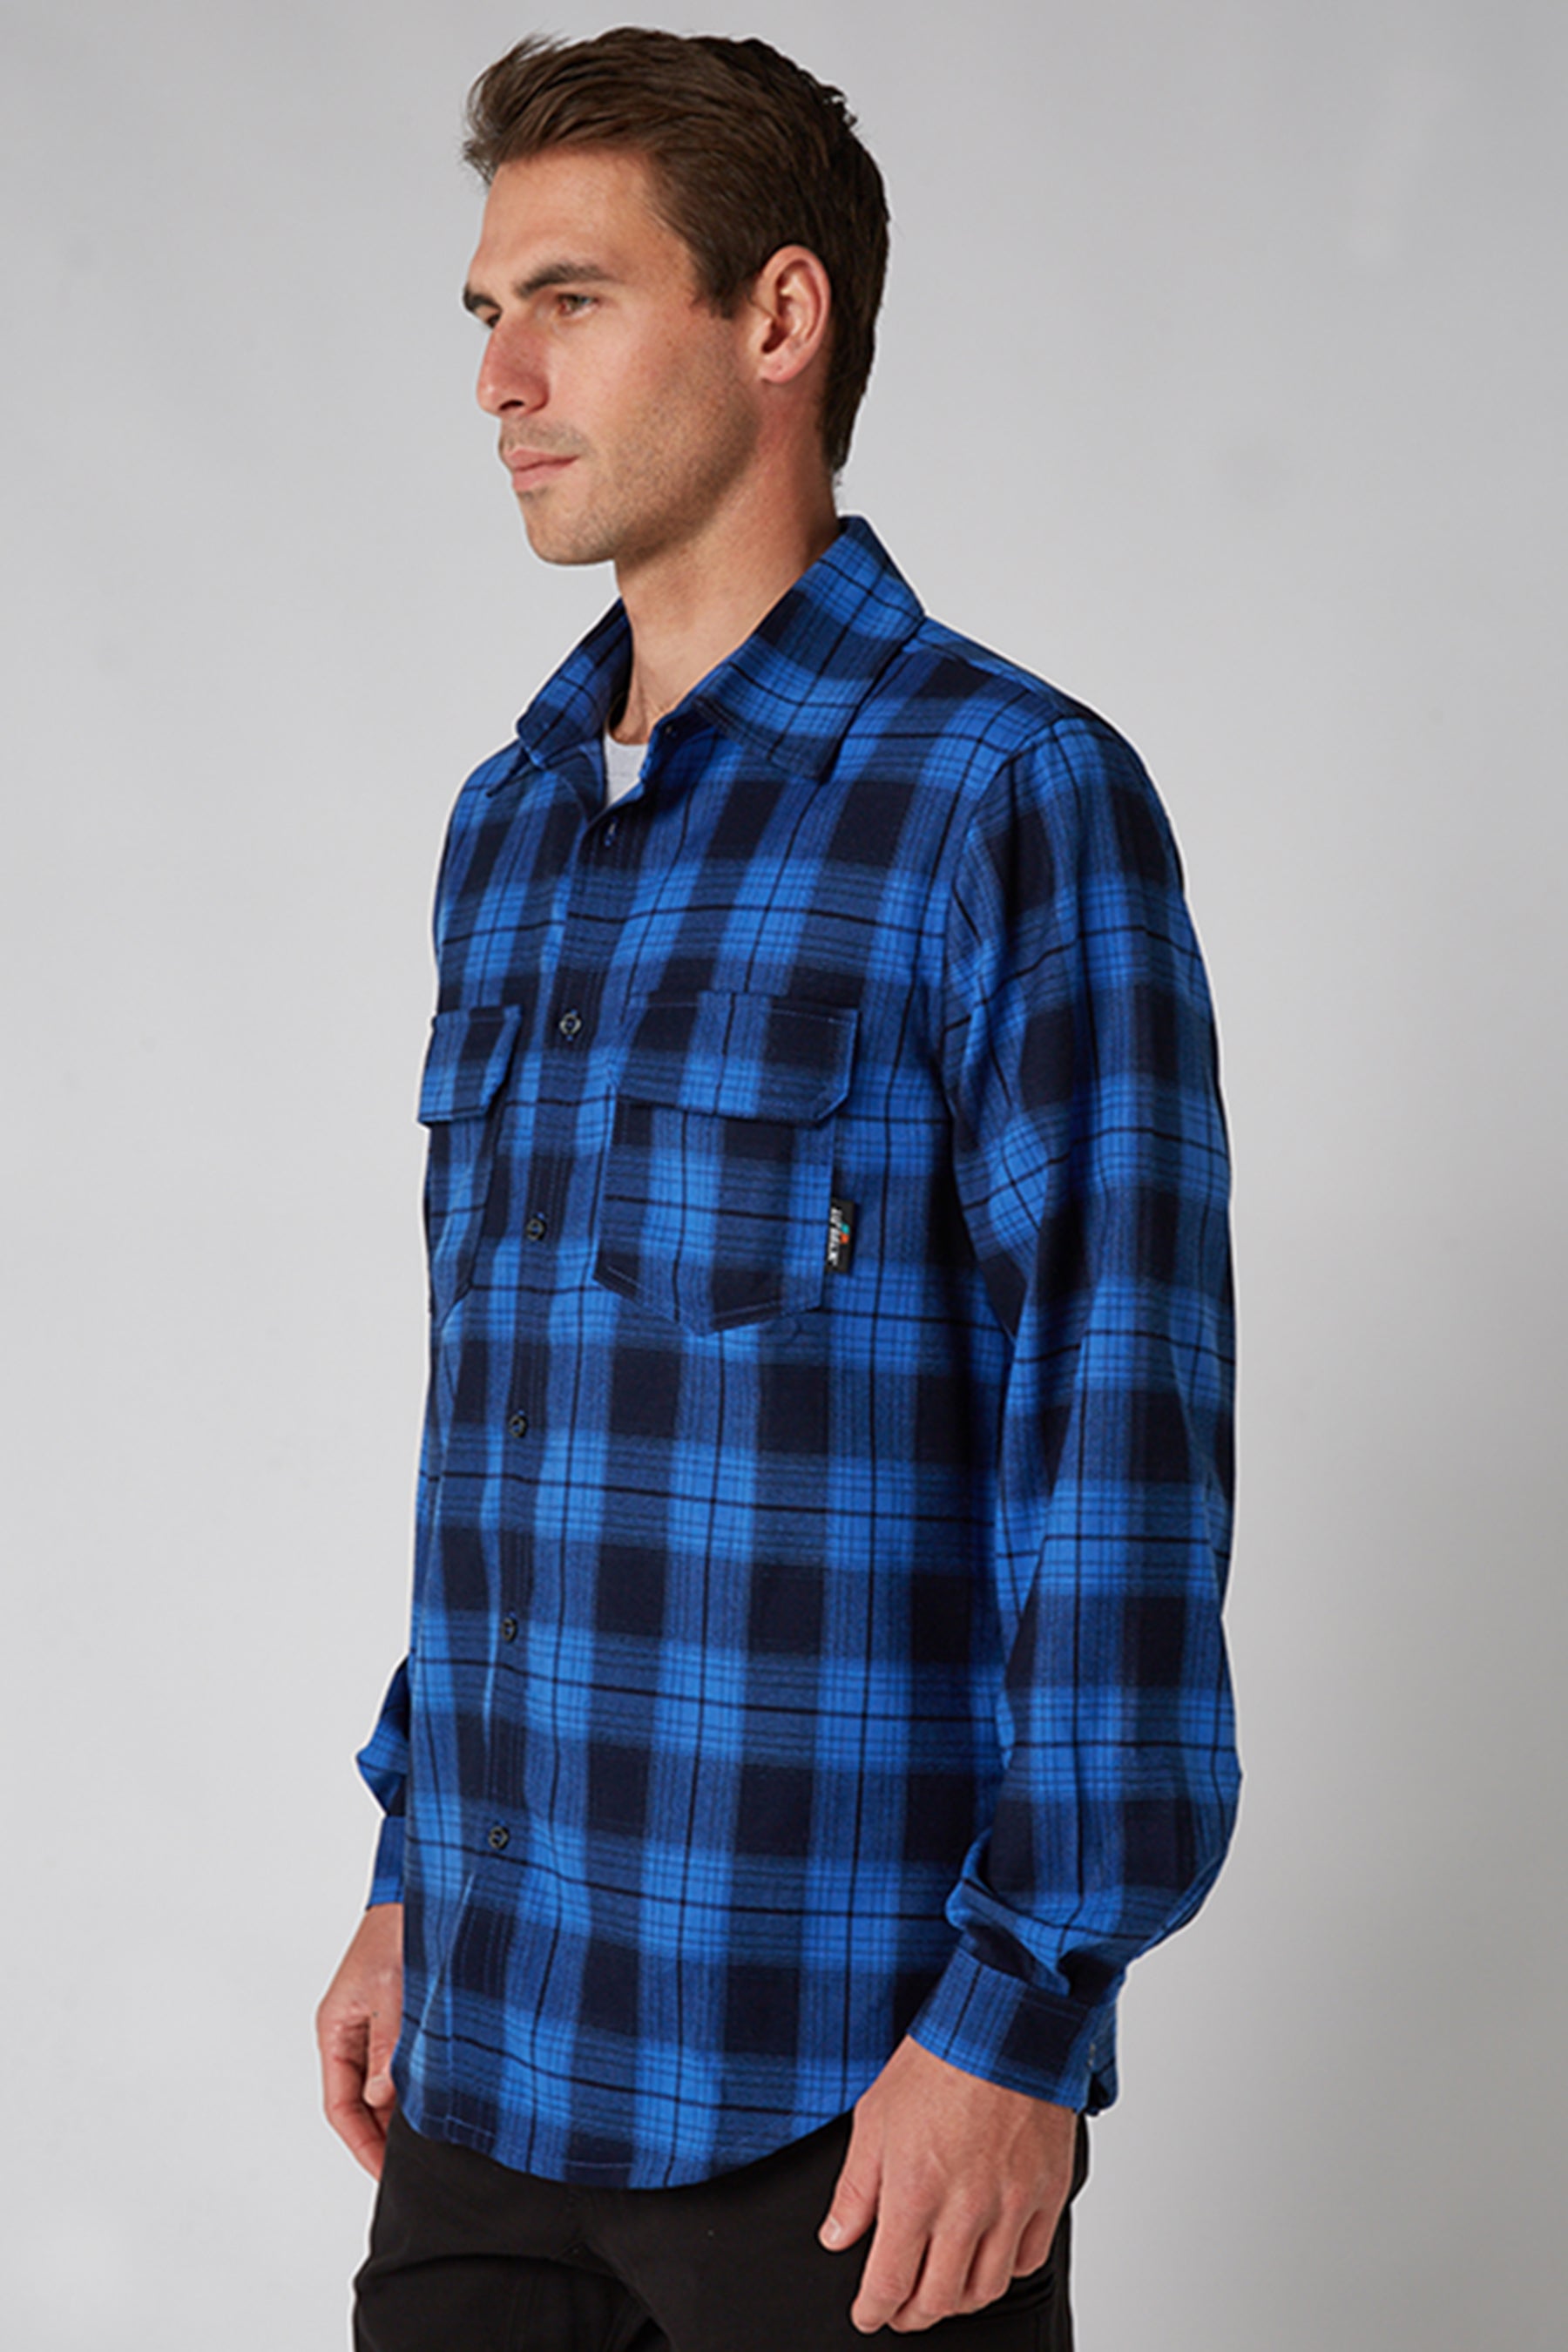 Jetpilot Mens Flannel Shirt - Blue